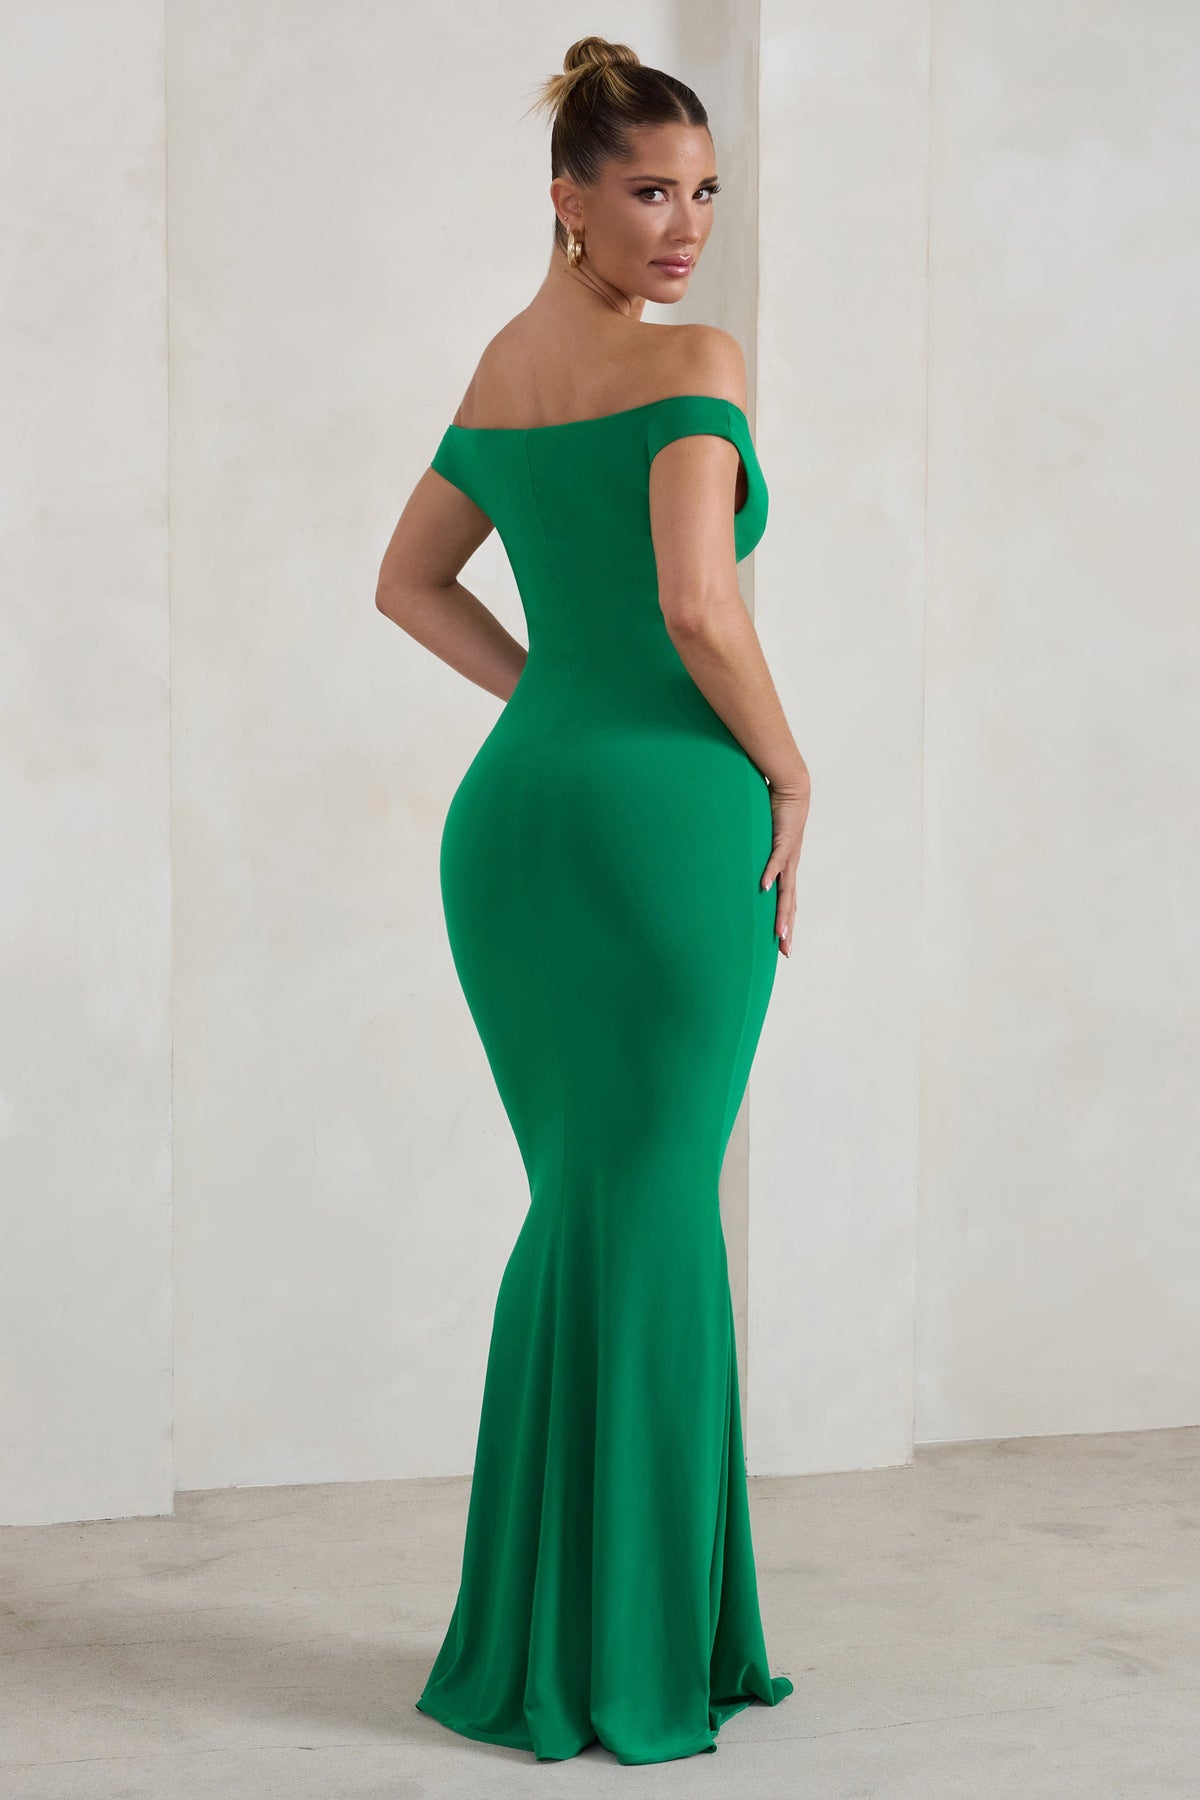 jade green dress